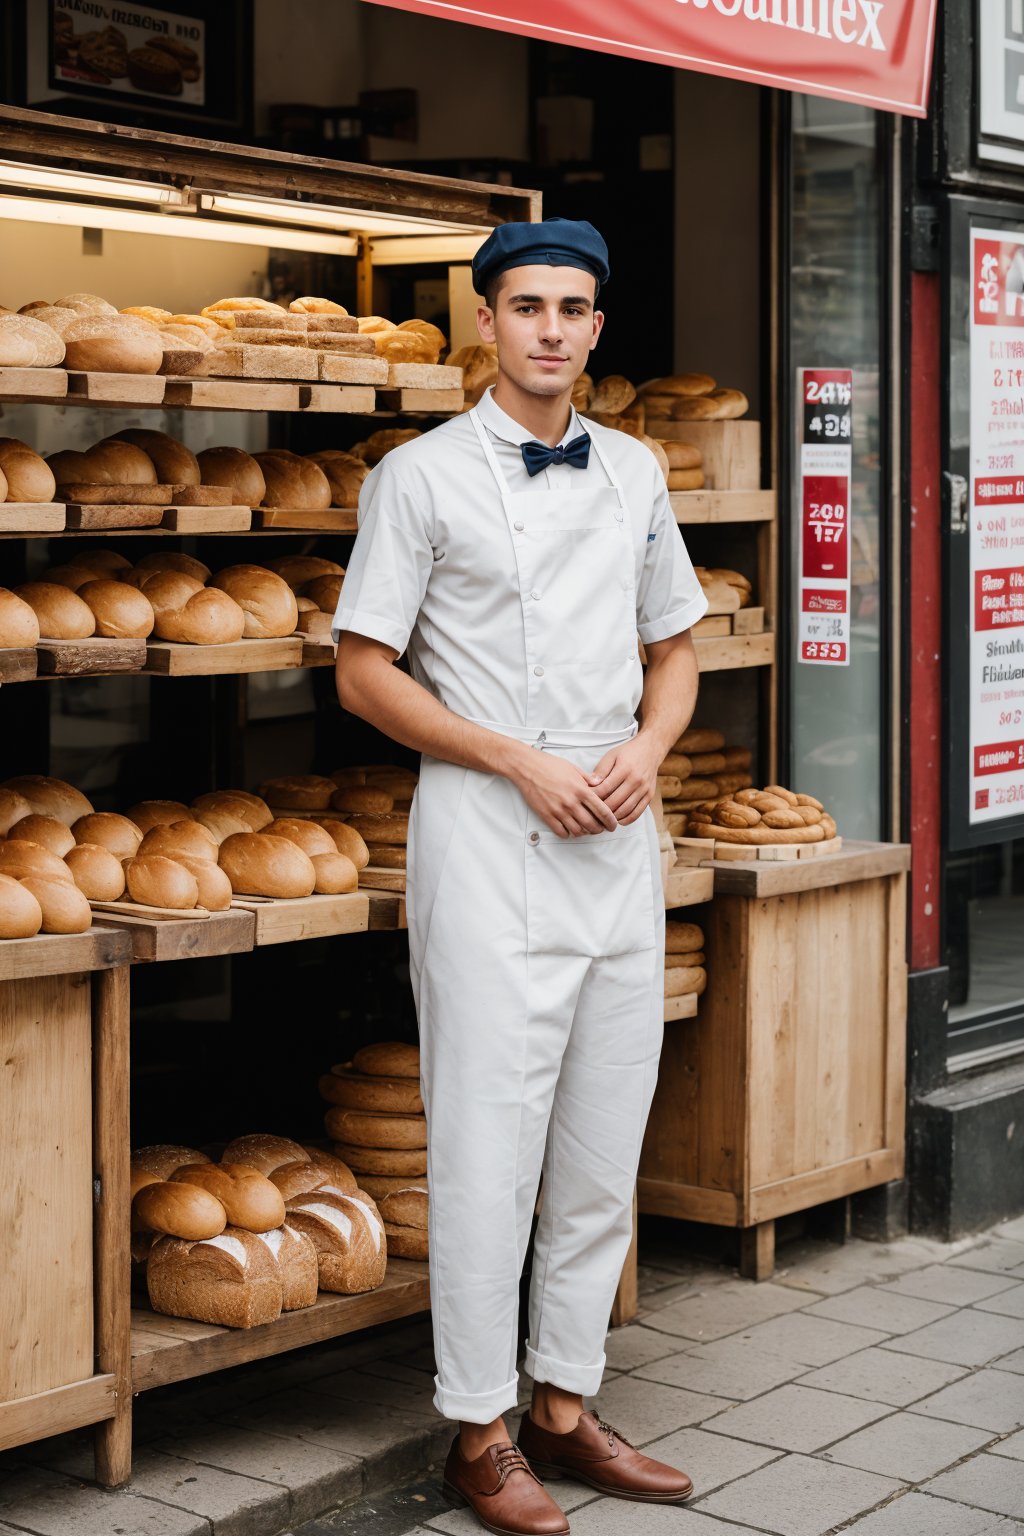 RAW photo, a amateur full body photo of 23 y.o european seller man, bread seller uniform, standing in the shop, natural skin, 8k uhd, high quality, film grain, Fujifilm XT3